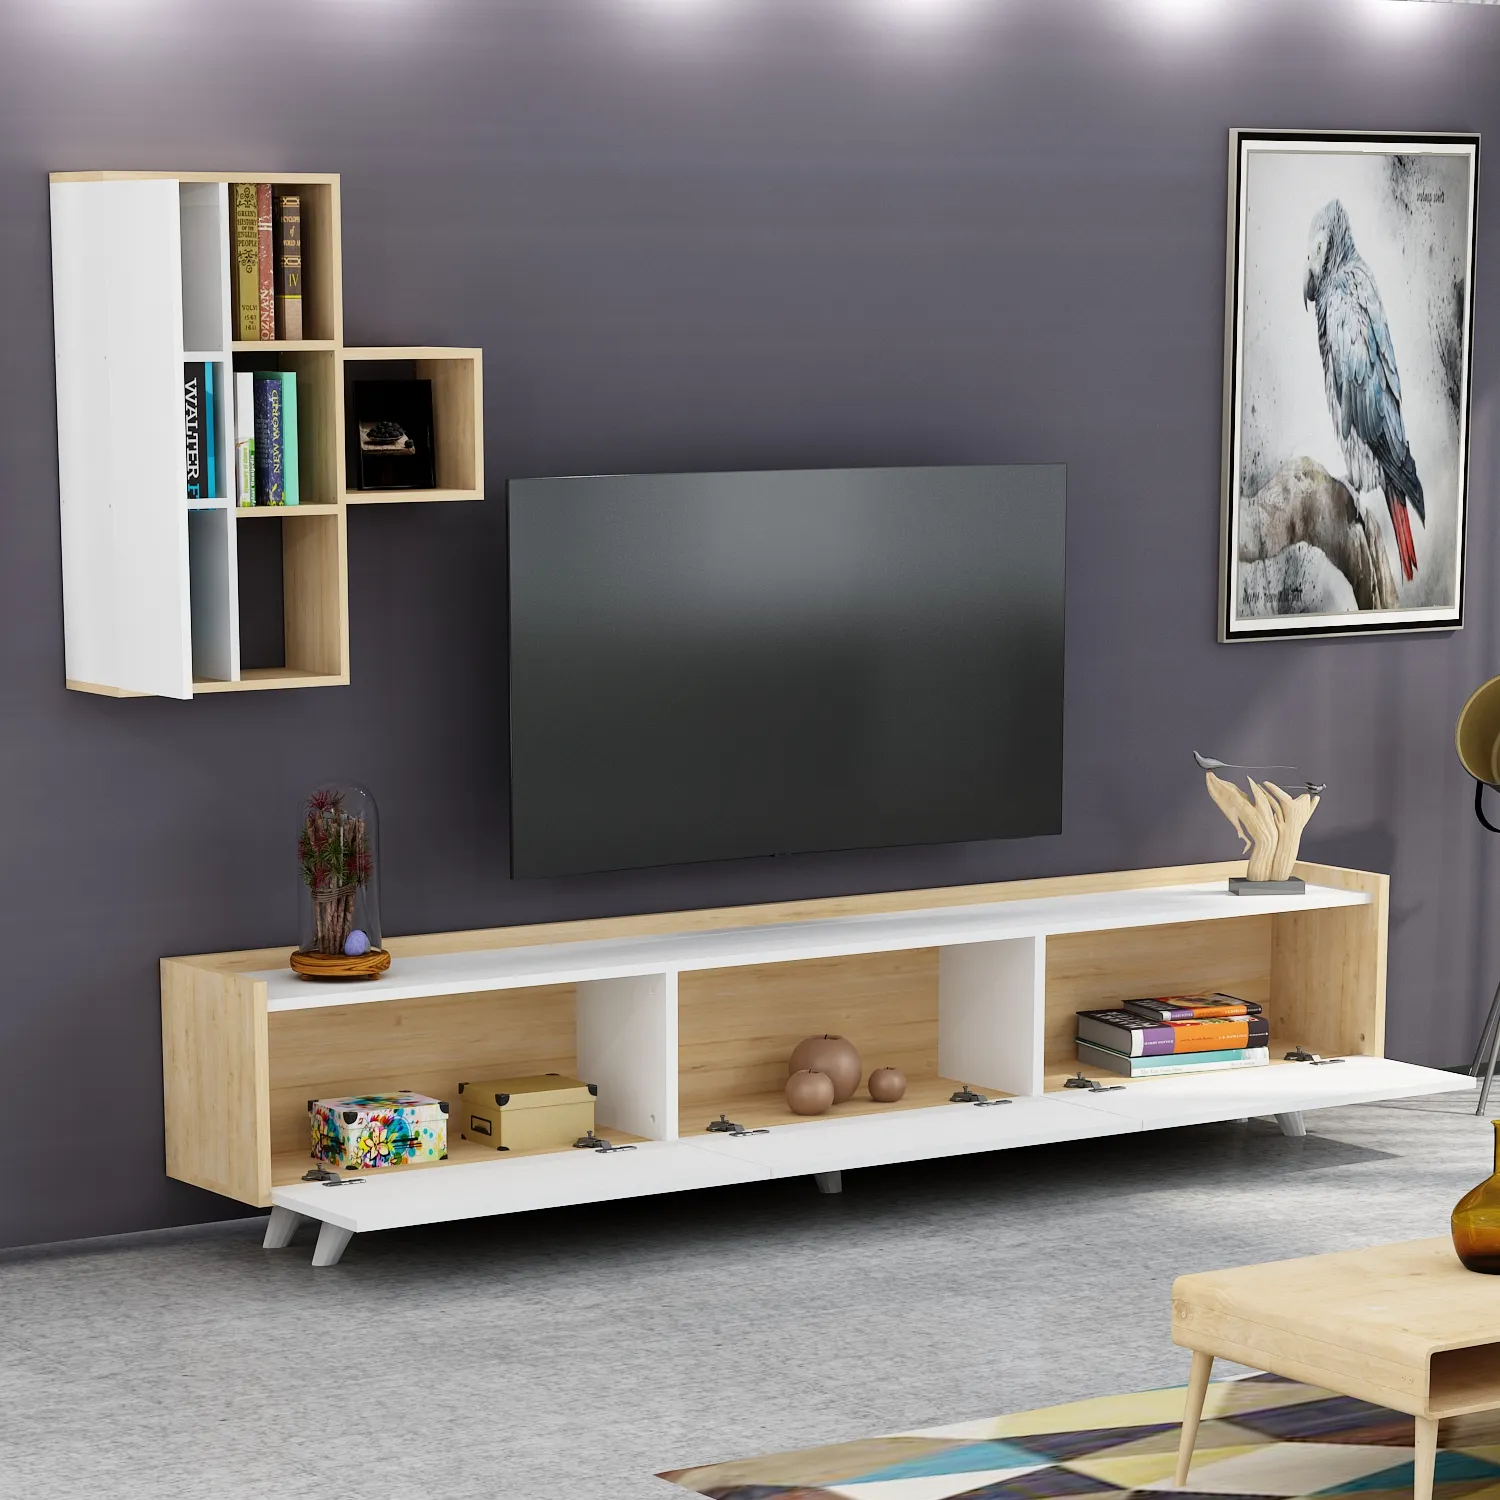 Ginger 184cm TV Stand TV Unit Entertainment Center Wall Cabinets Shelves for 47" TVs , Living Room Furniture- Oak & White